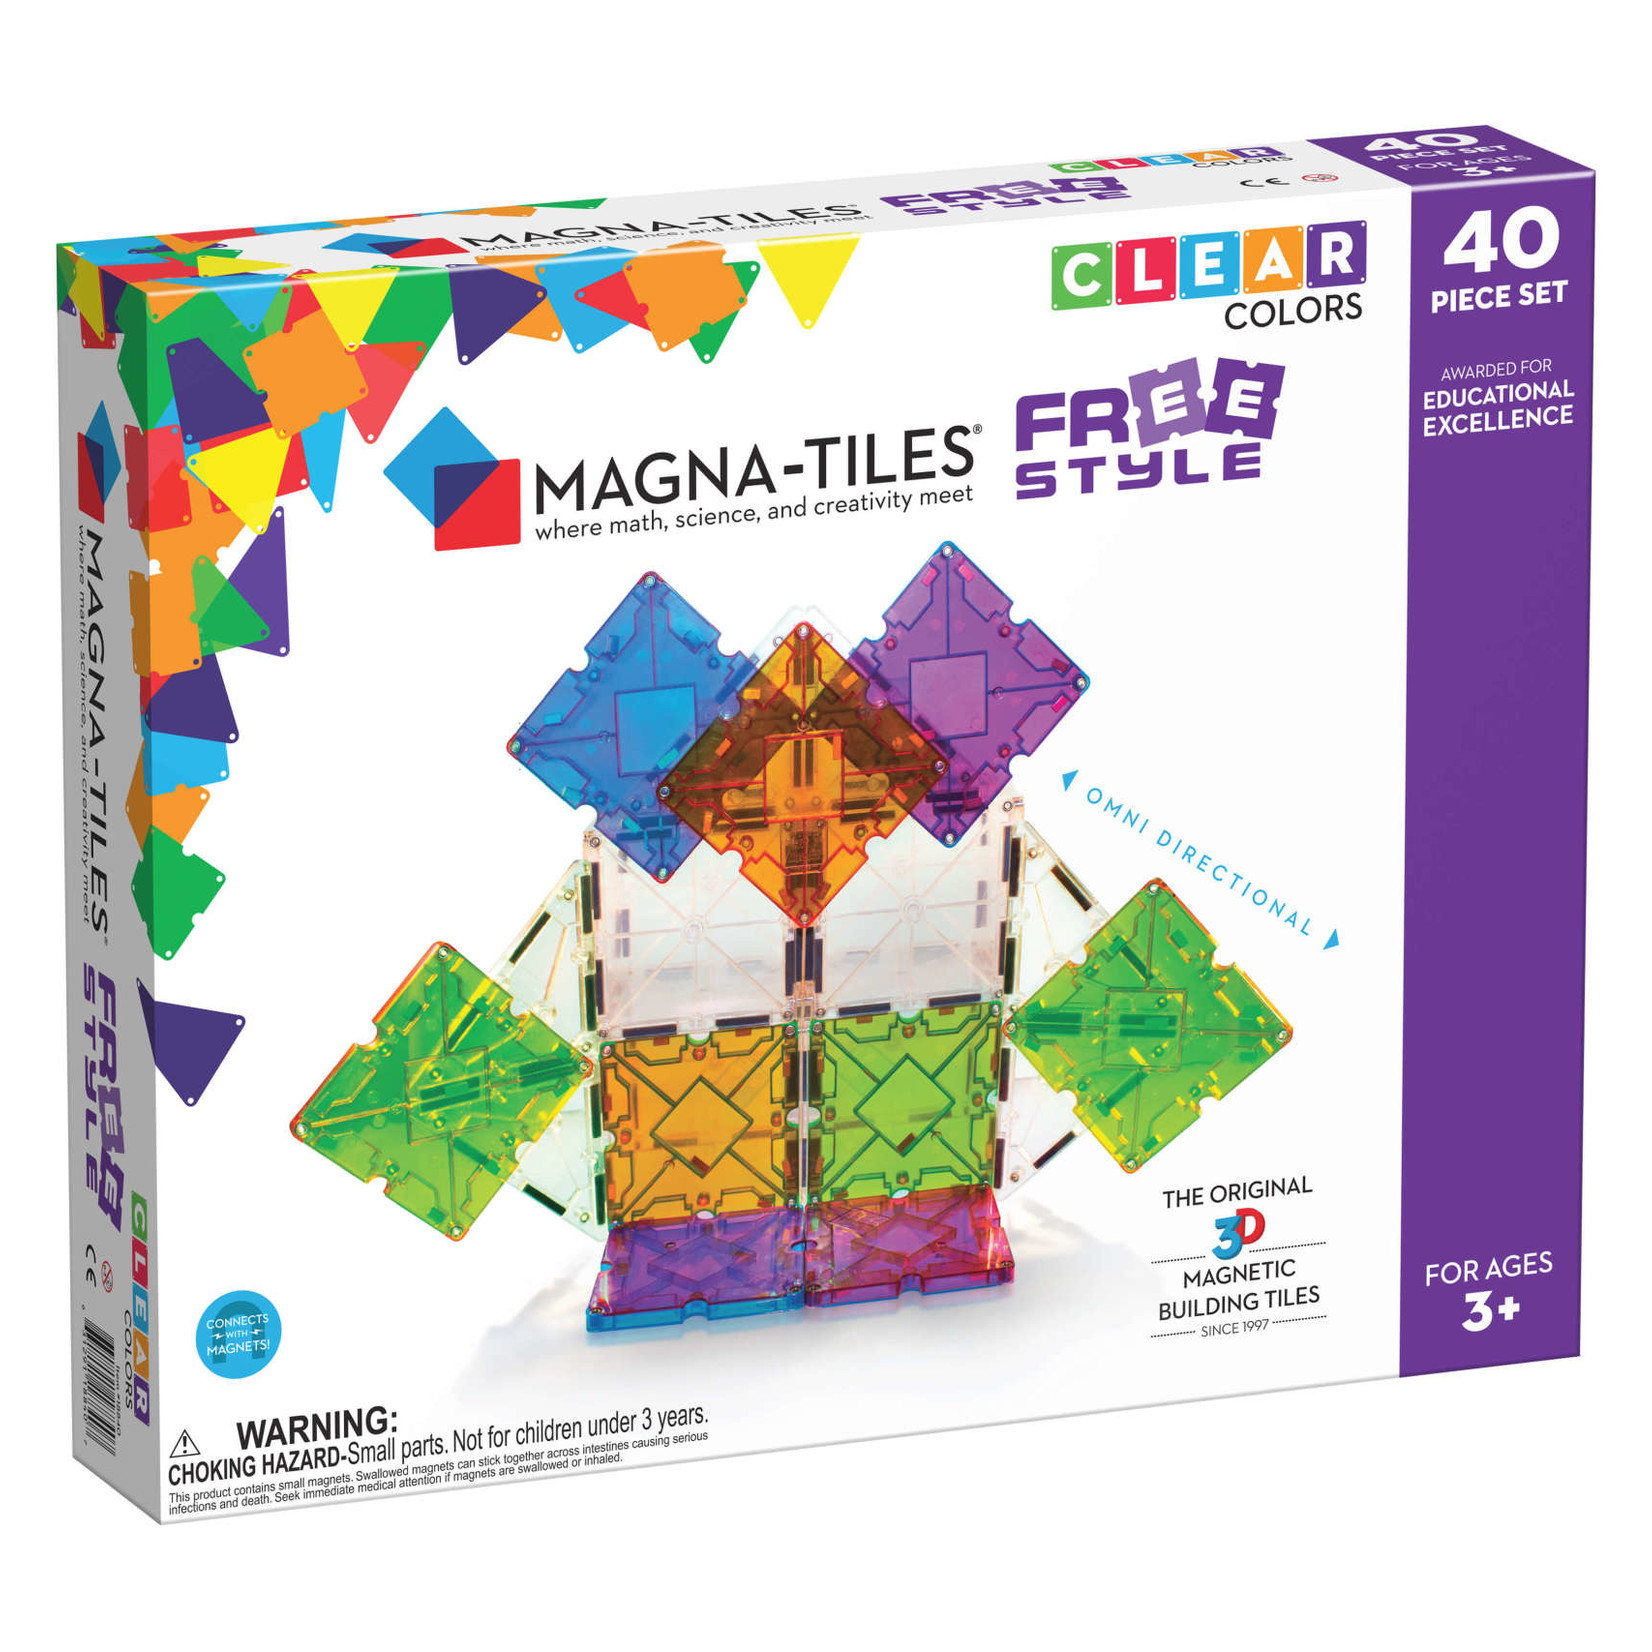 Magna Tiles Magnatile Free Style 40 piece